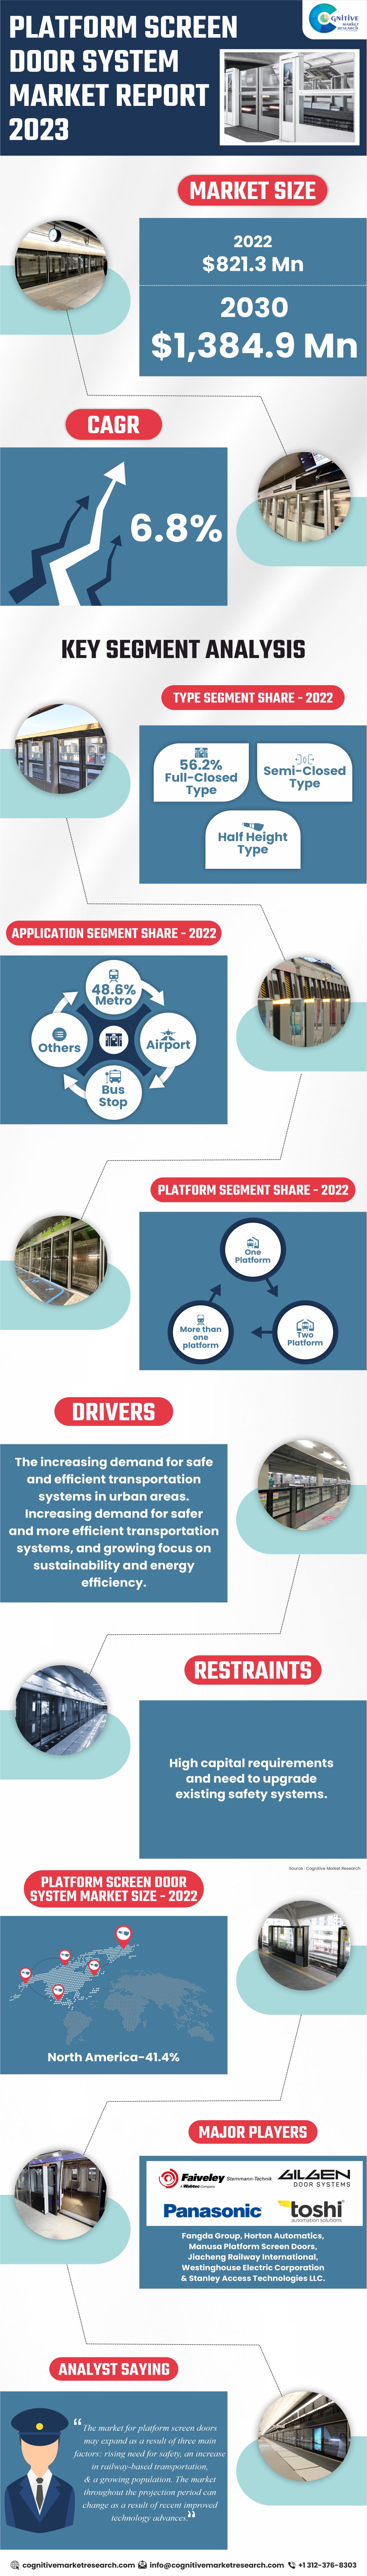 Platform Screen Door System market size was $821.3 Million in 2022!